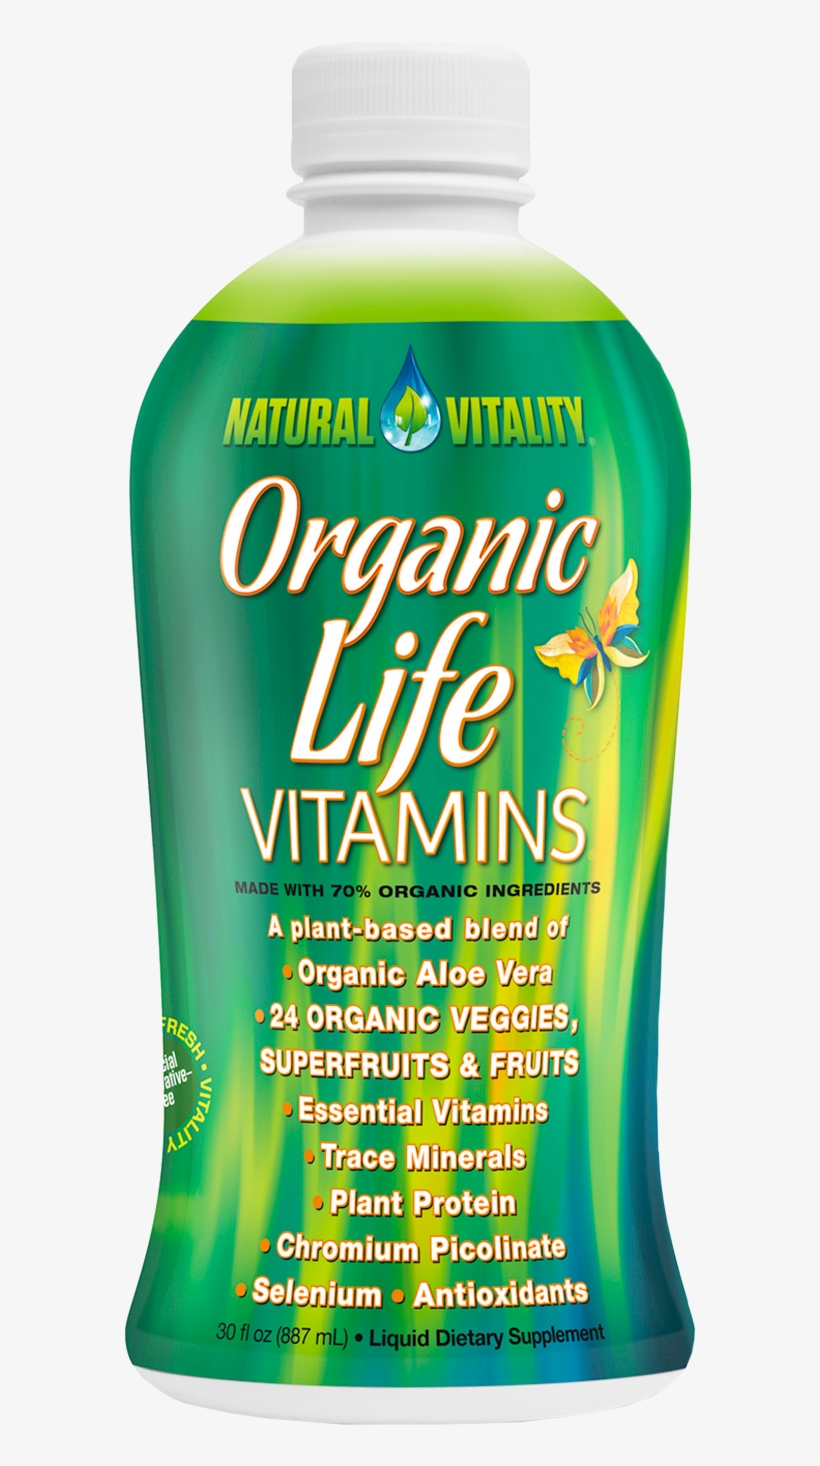 Organic Life Vitamins - Natural Vitality Organic Life Vitamins - 30 Fl Oz, transparent png #3516790